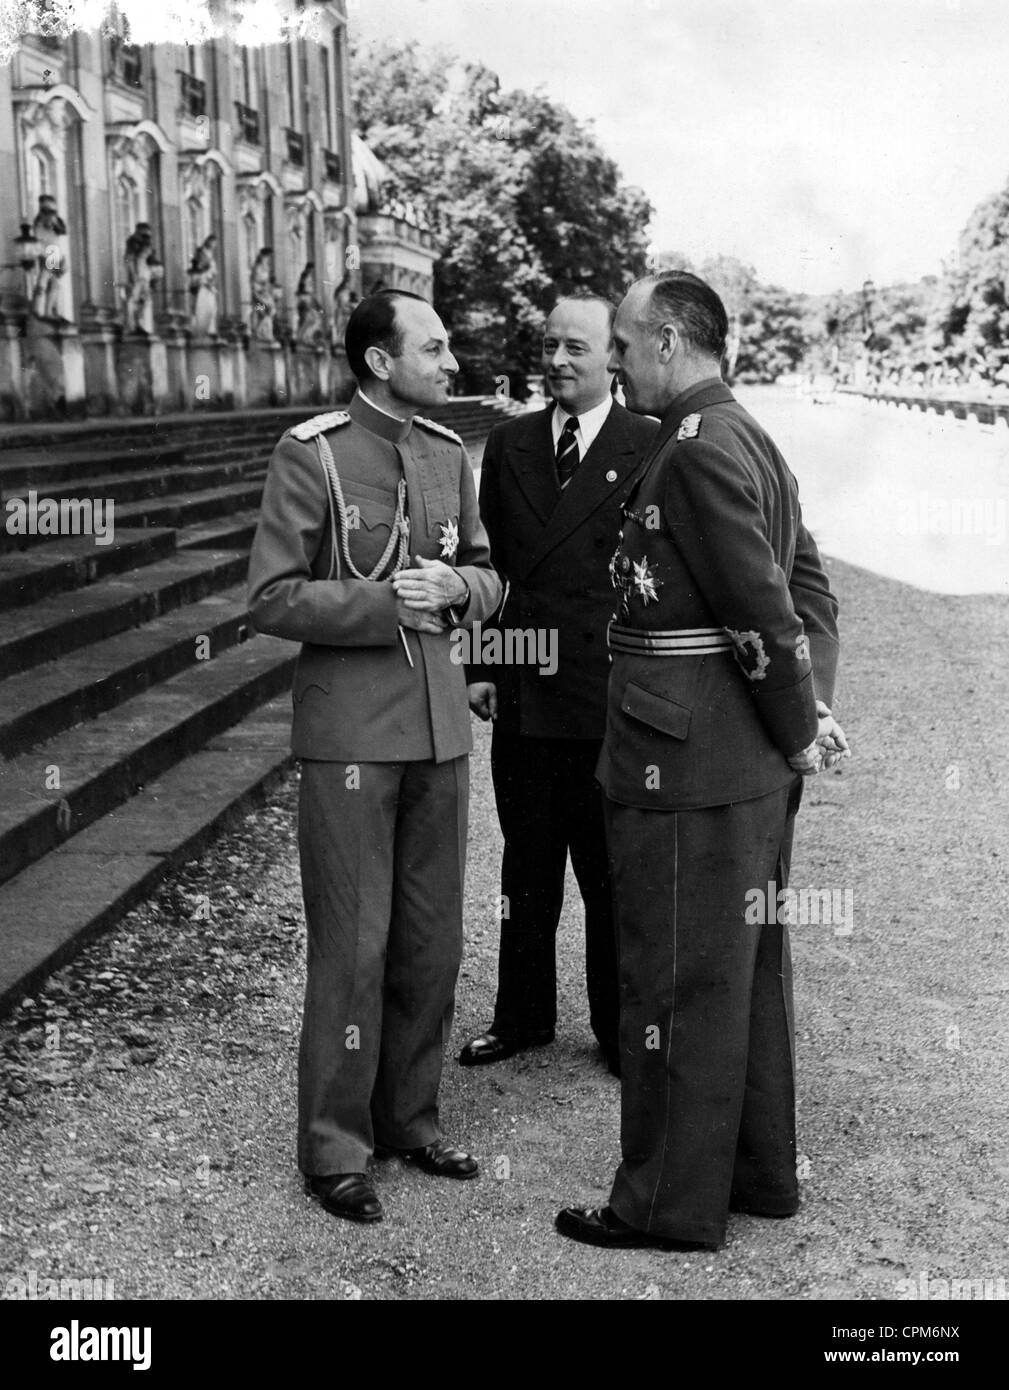 Prince Regent Paul of Yugoslavia with Prince Philipp von Hessen and Joachim von Ribbentrop, 1939 Stock Photo